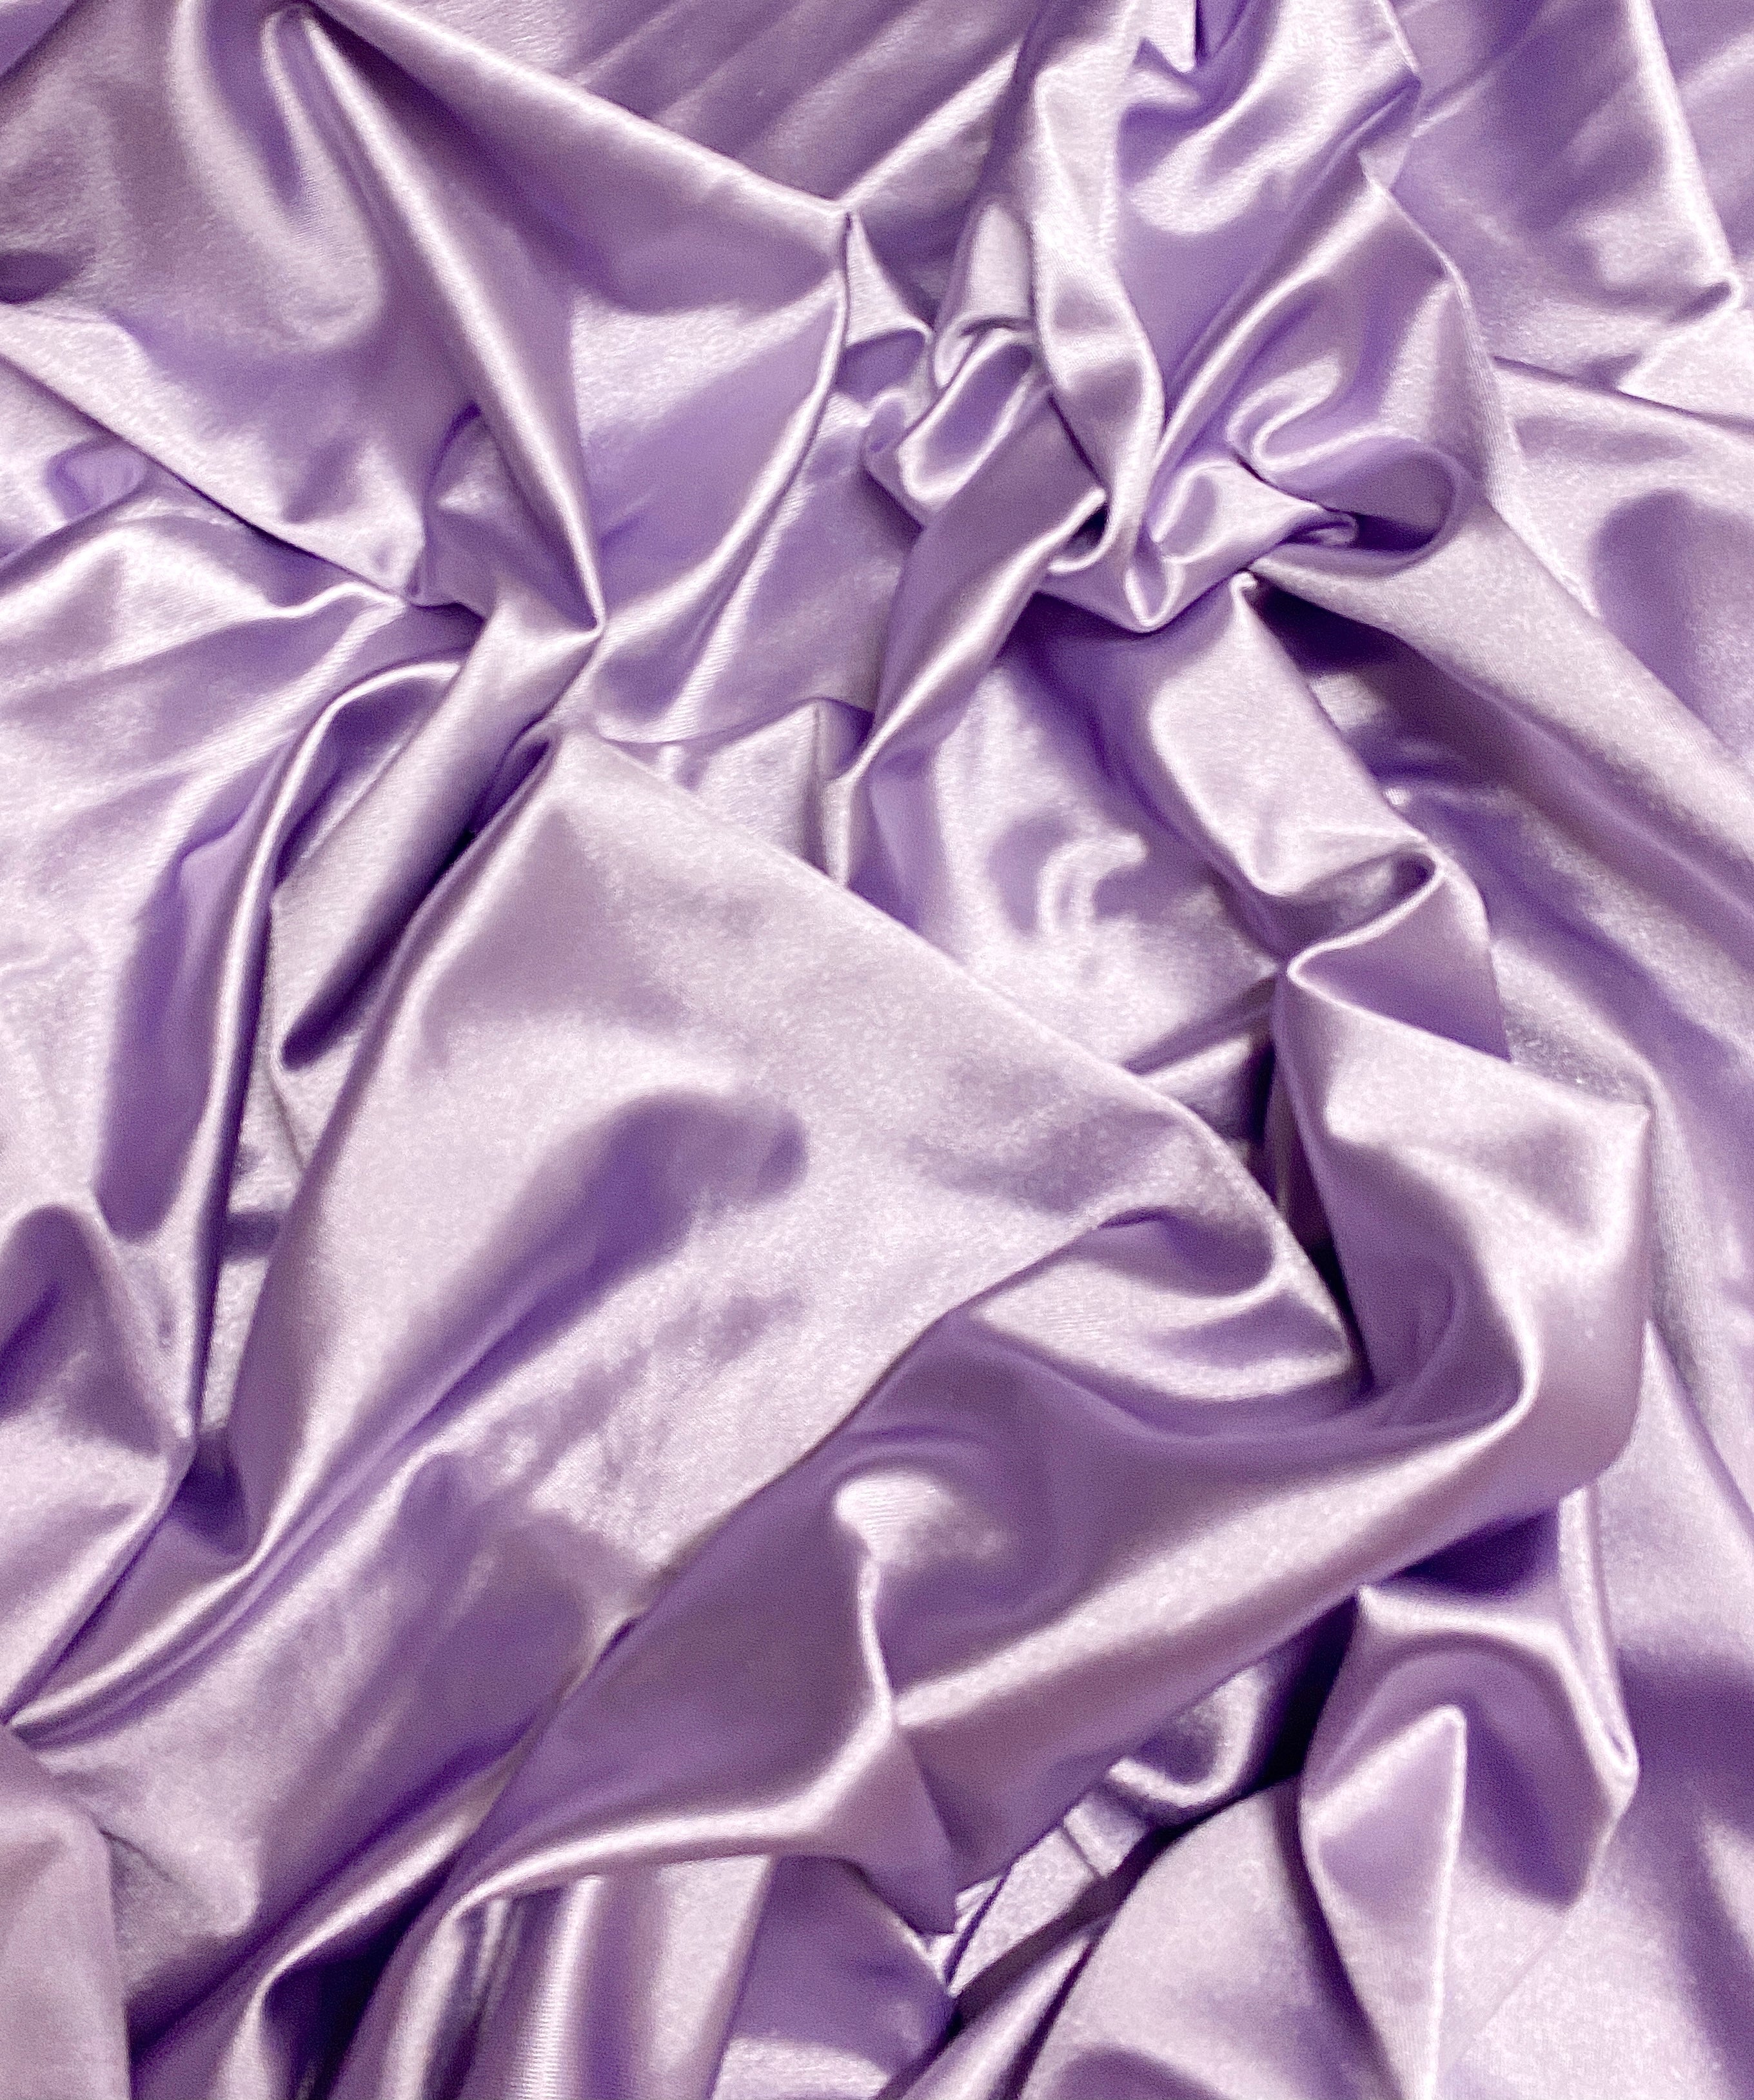 lavender spandex, purple nylon spandex, light Light purple spandex, dark purple nylon spandex, lavender shiny nylon spandex for woman, lavender shiny nylon for bride, spandex for swim wear, premium spandex, spandex on sale, low price spandex